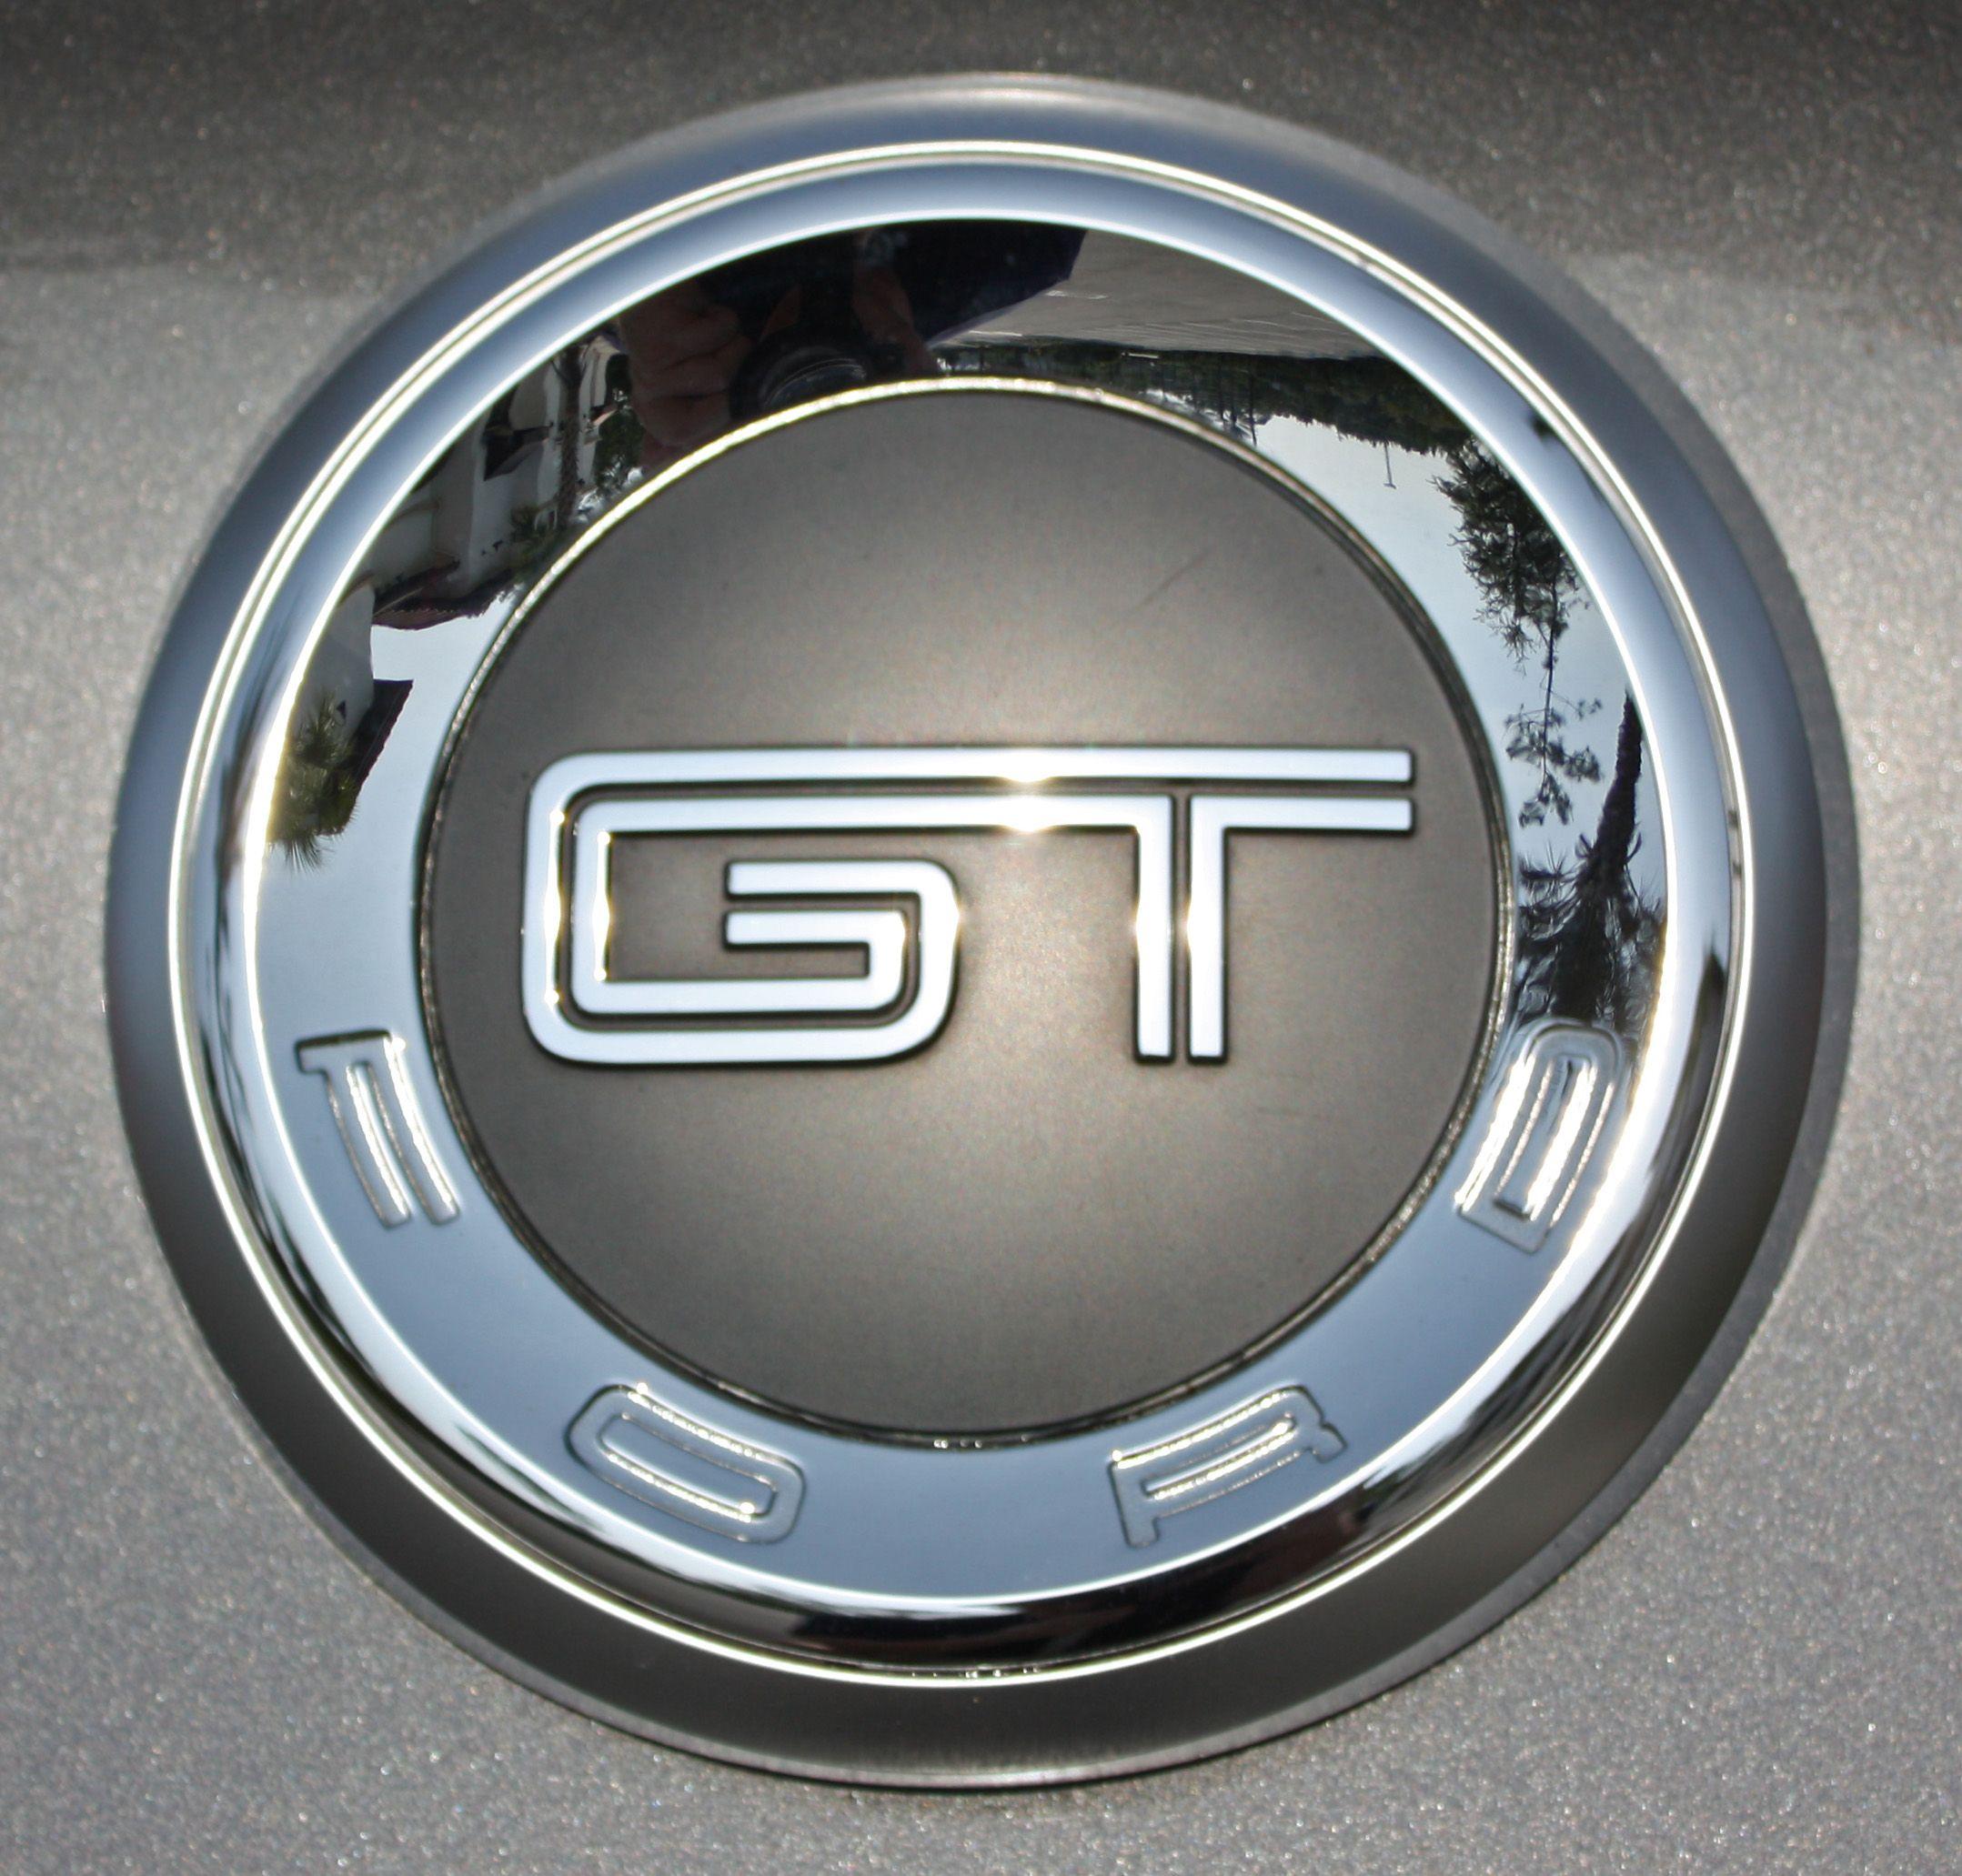 GT Car Logo - Gt Logos